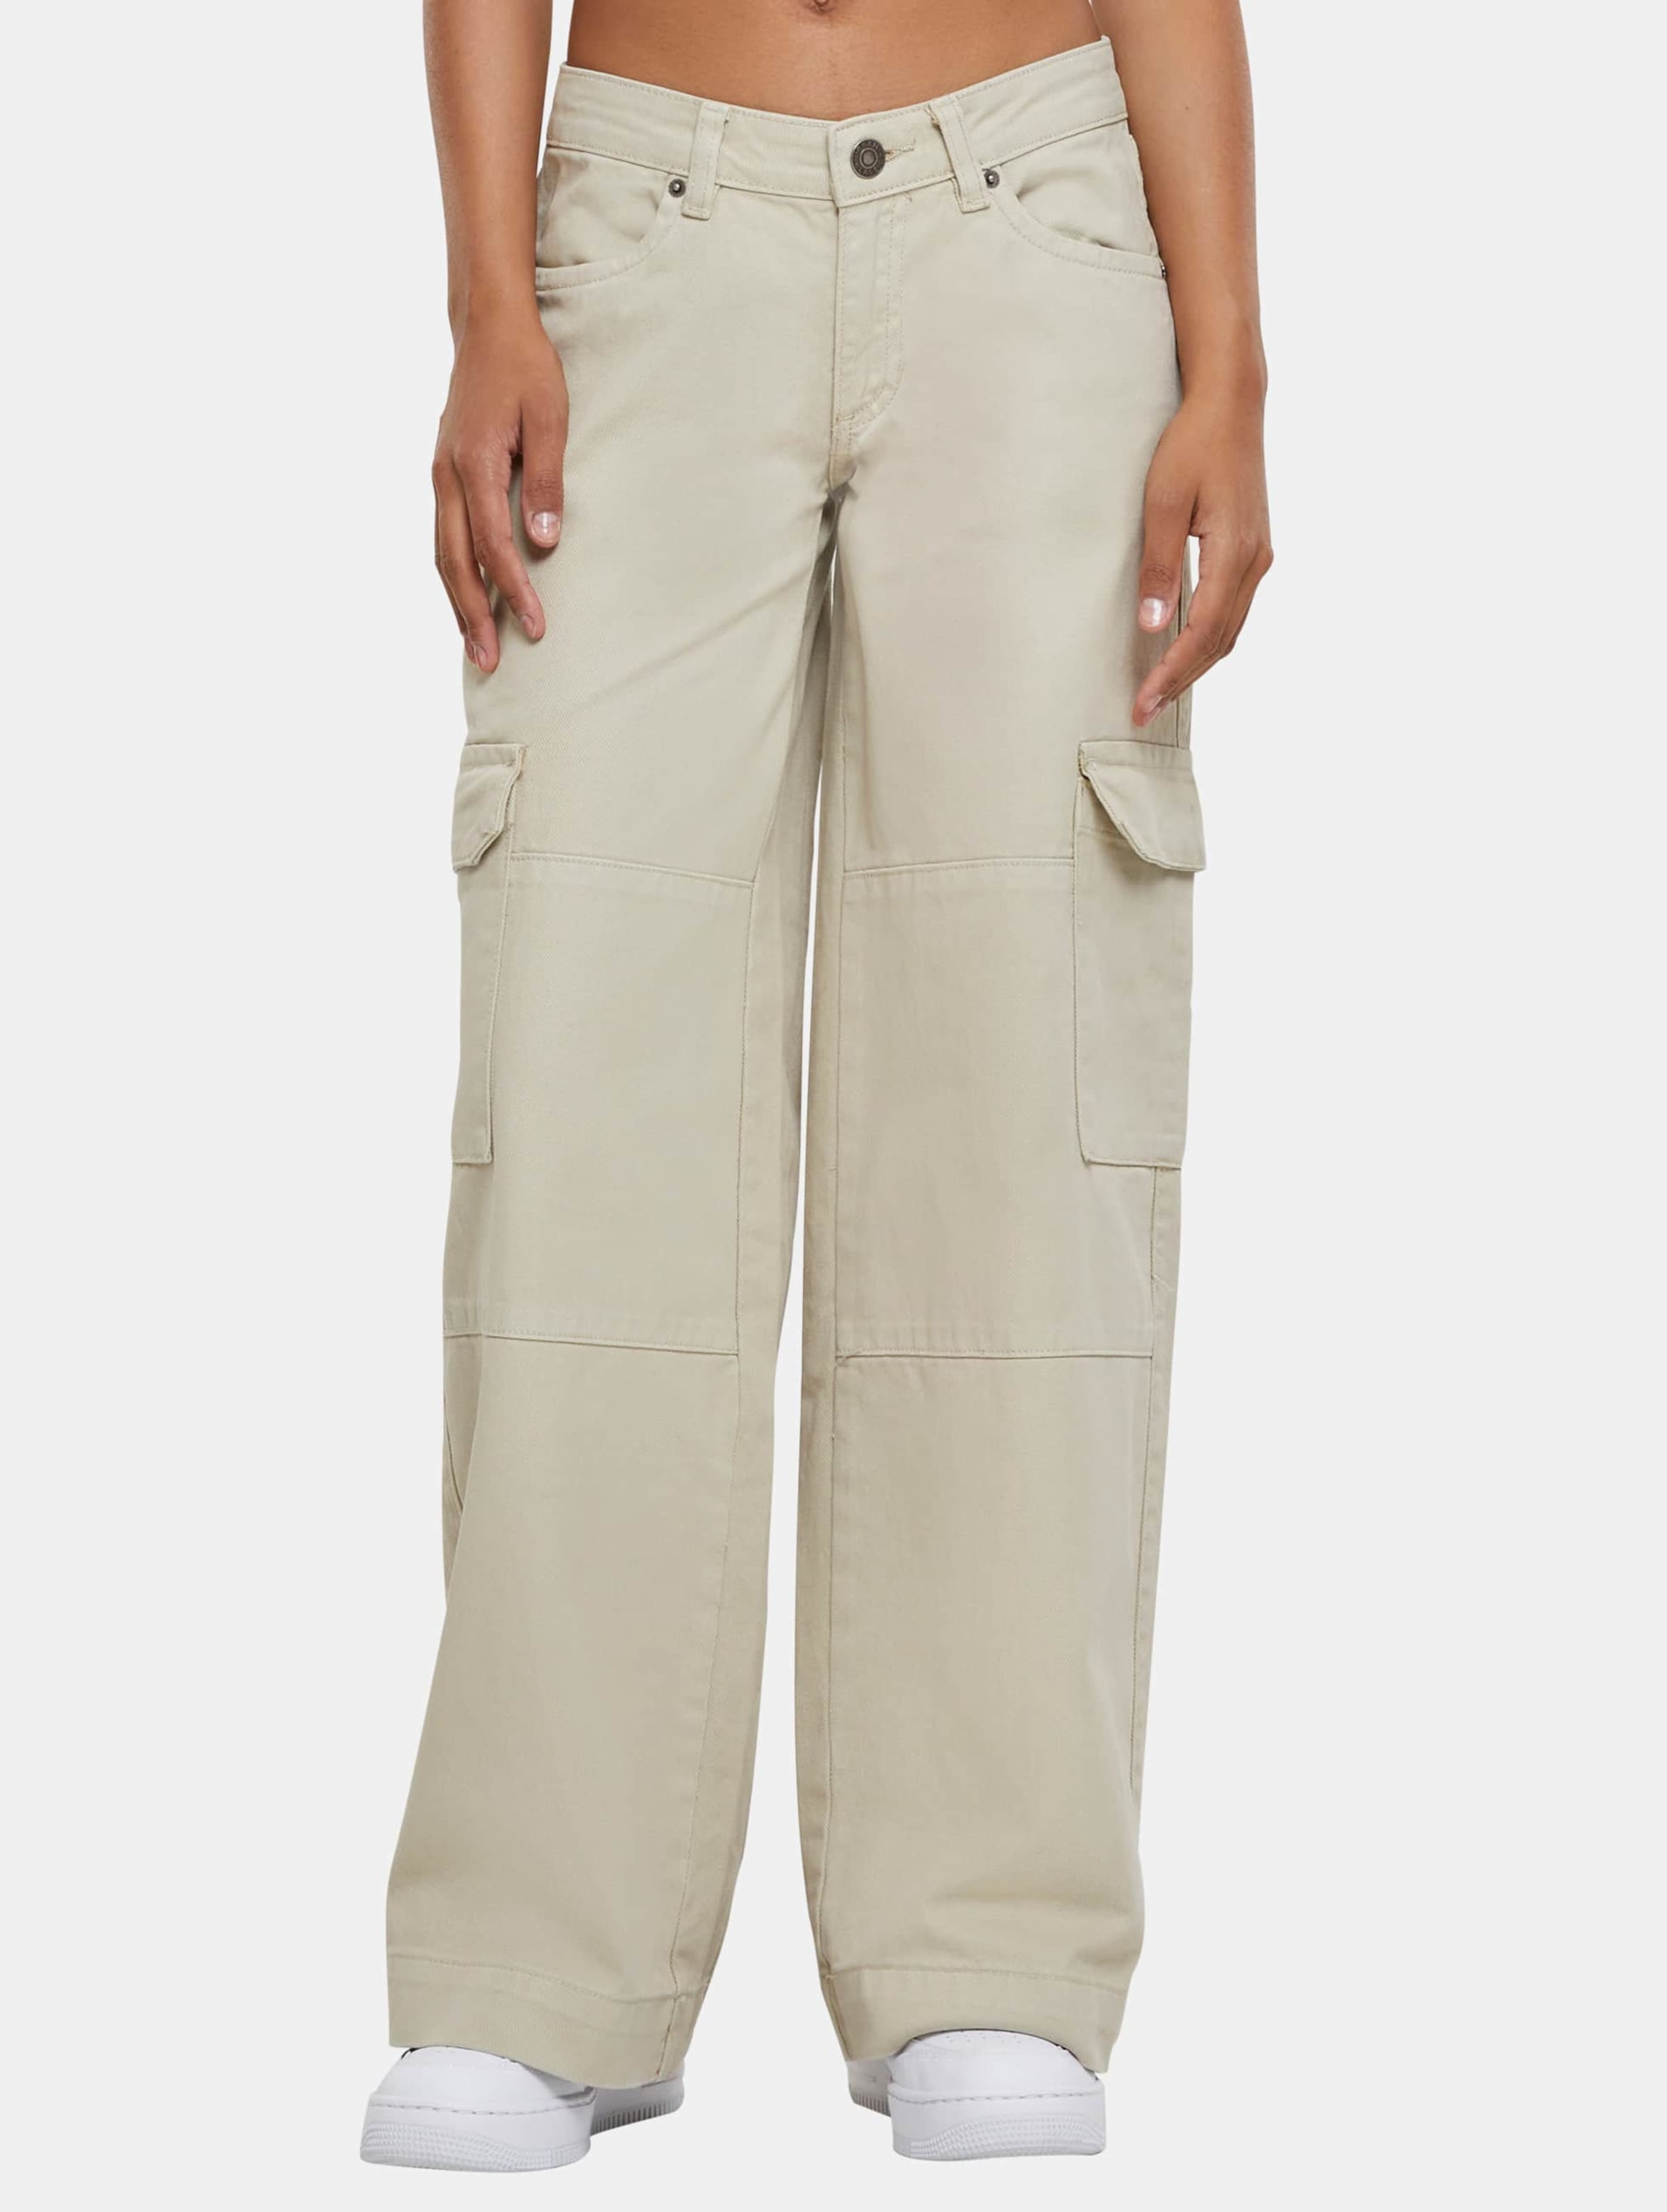 Urban Classics - Low Waist Denim Cargo trousers - Taille, 32 inch - Gebroken wit